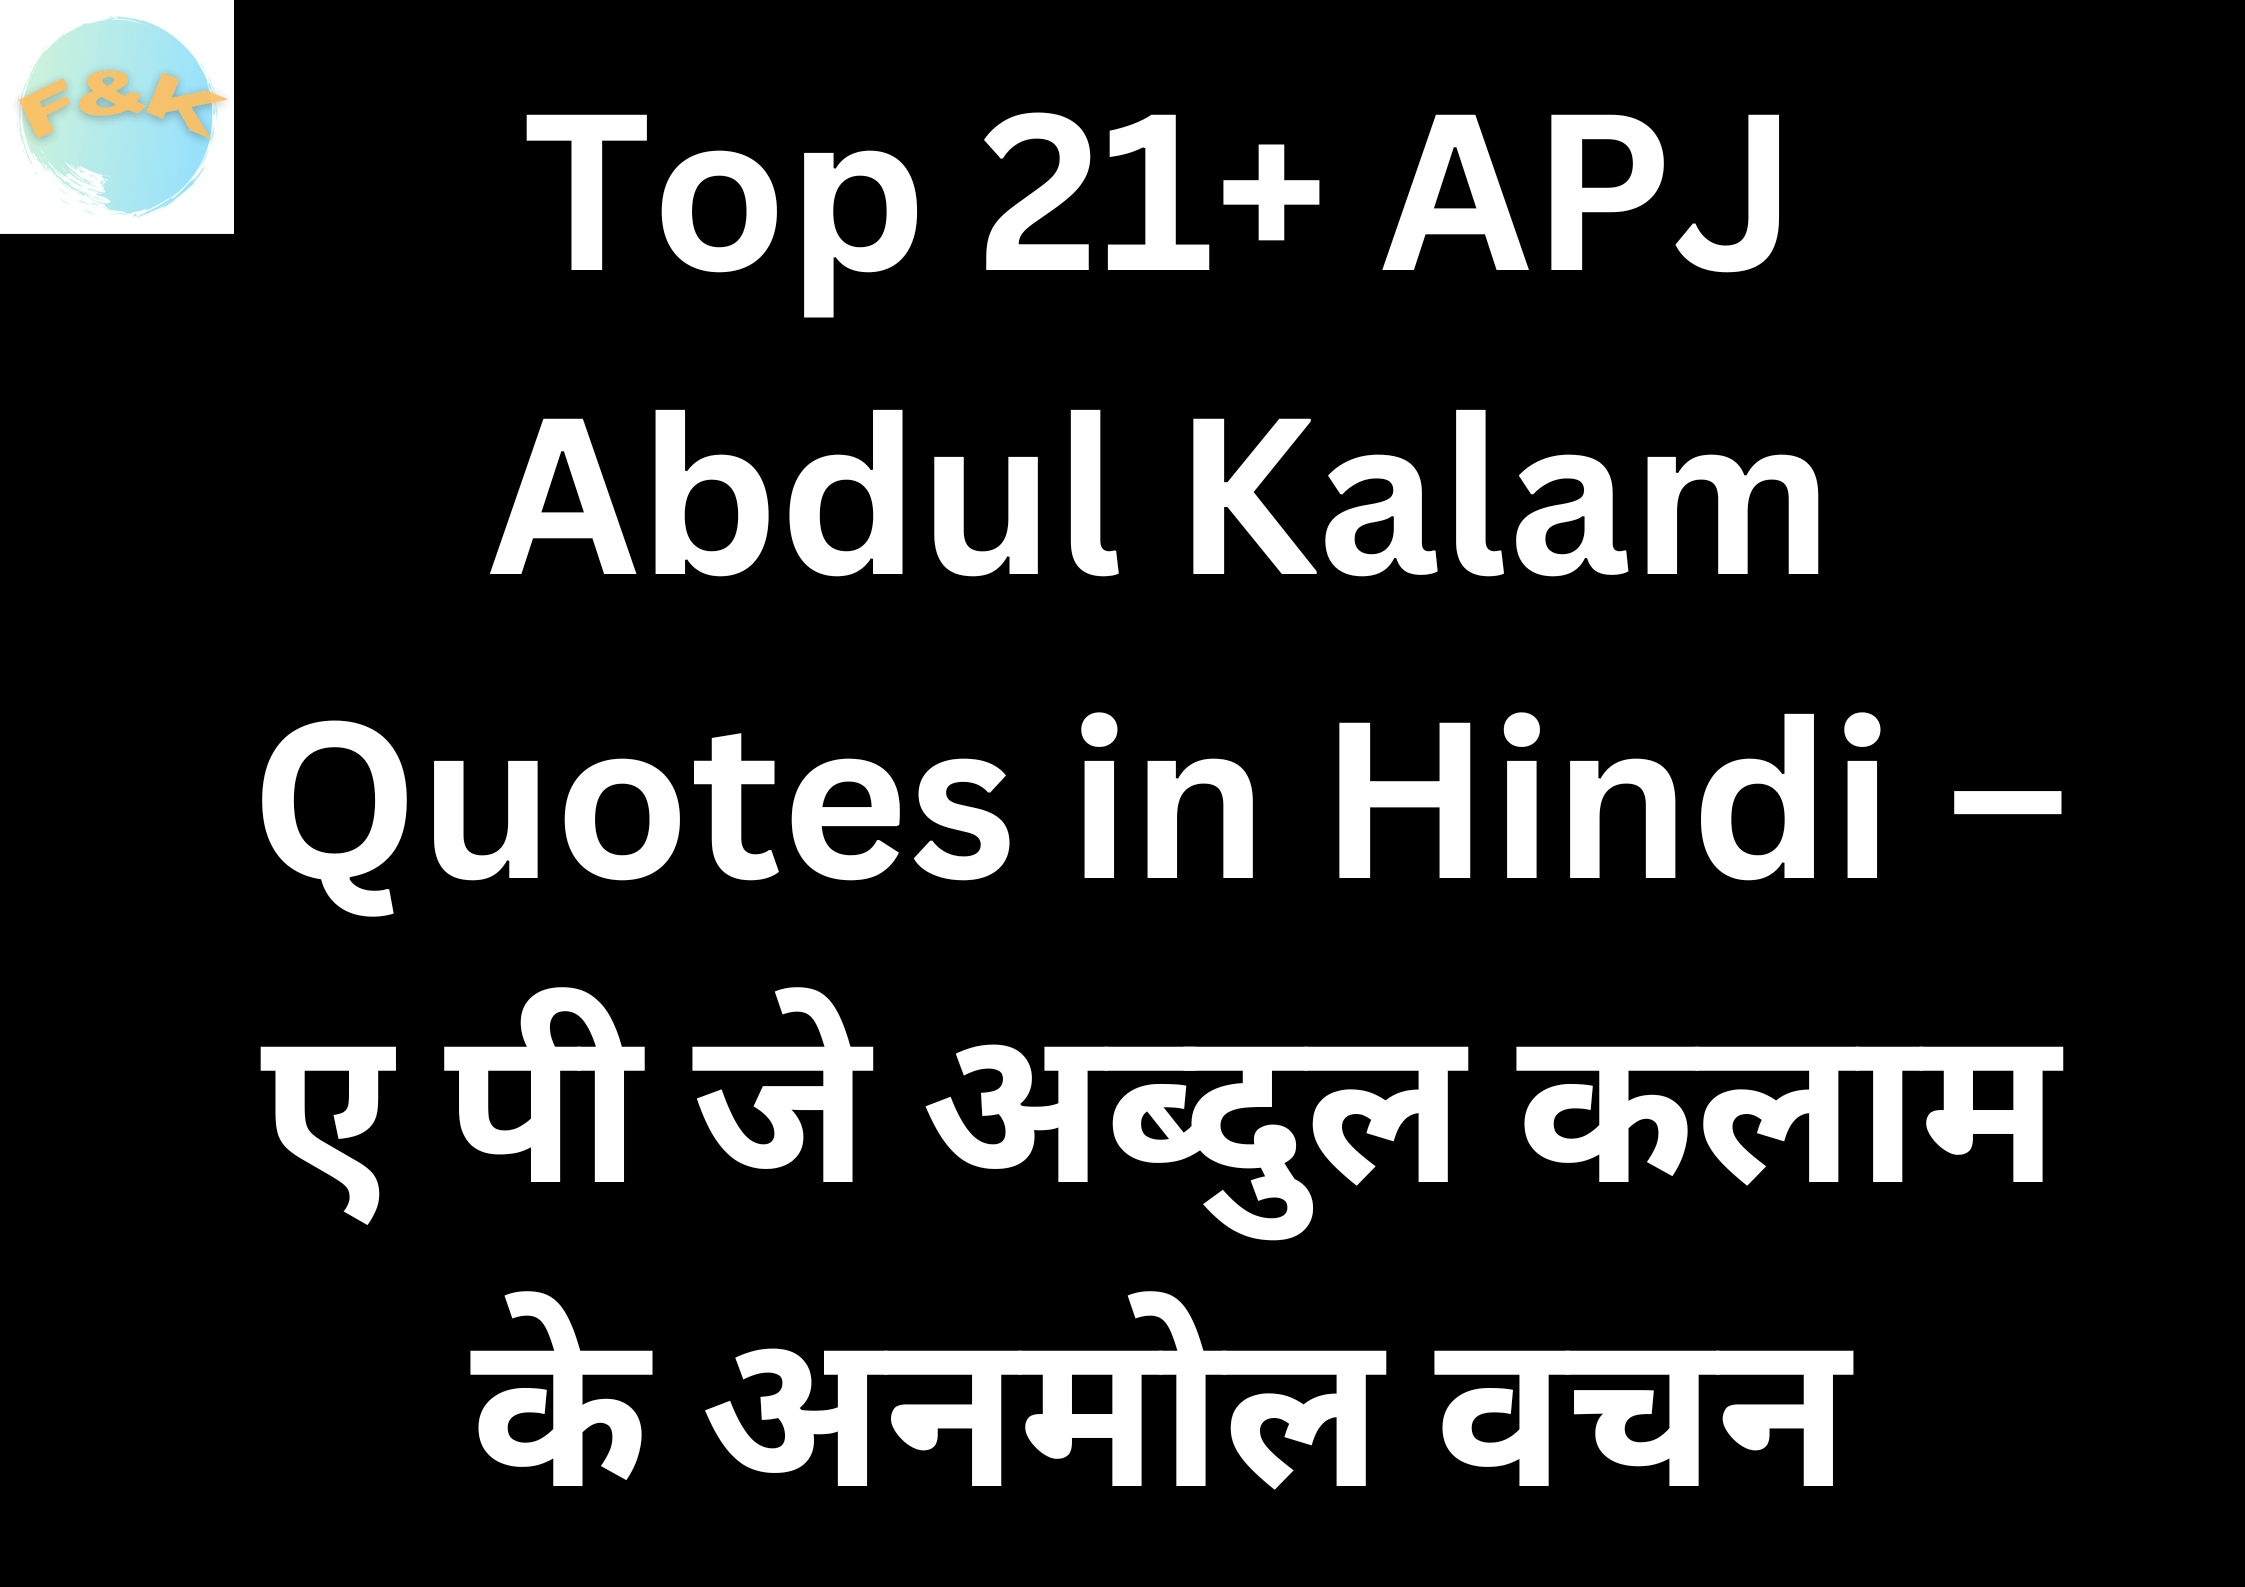 Top 21+ APJ Abdul Kalam Quotes in Hindi – ए पी जे अब्दुल कलाम के अनमोल वचन | Hindi Quotes | Abdul Kalam Quotes | India Quotes in Hindi